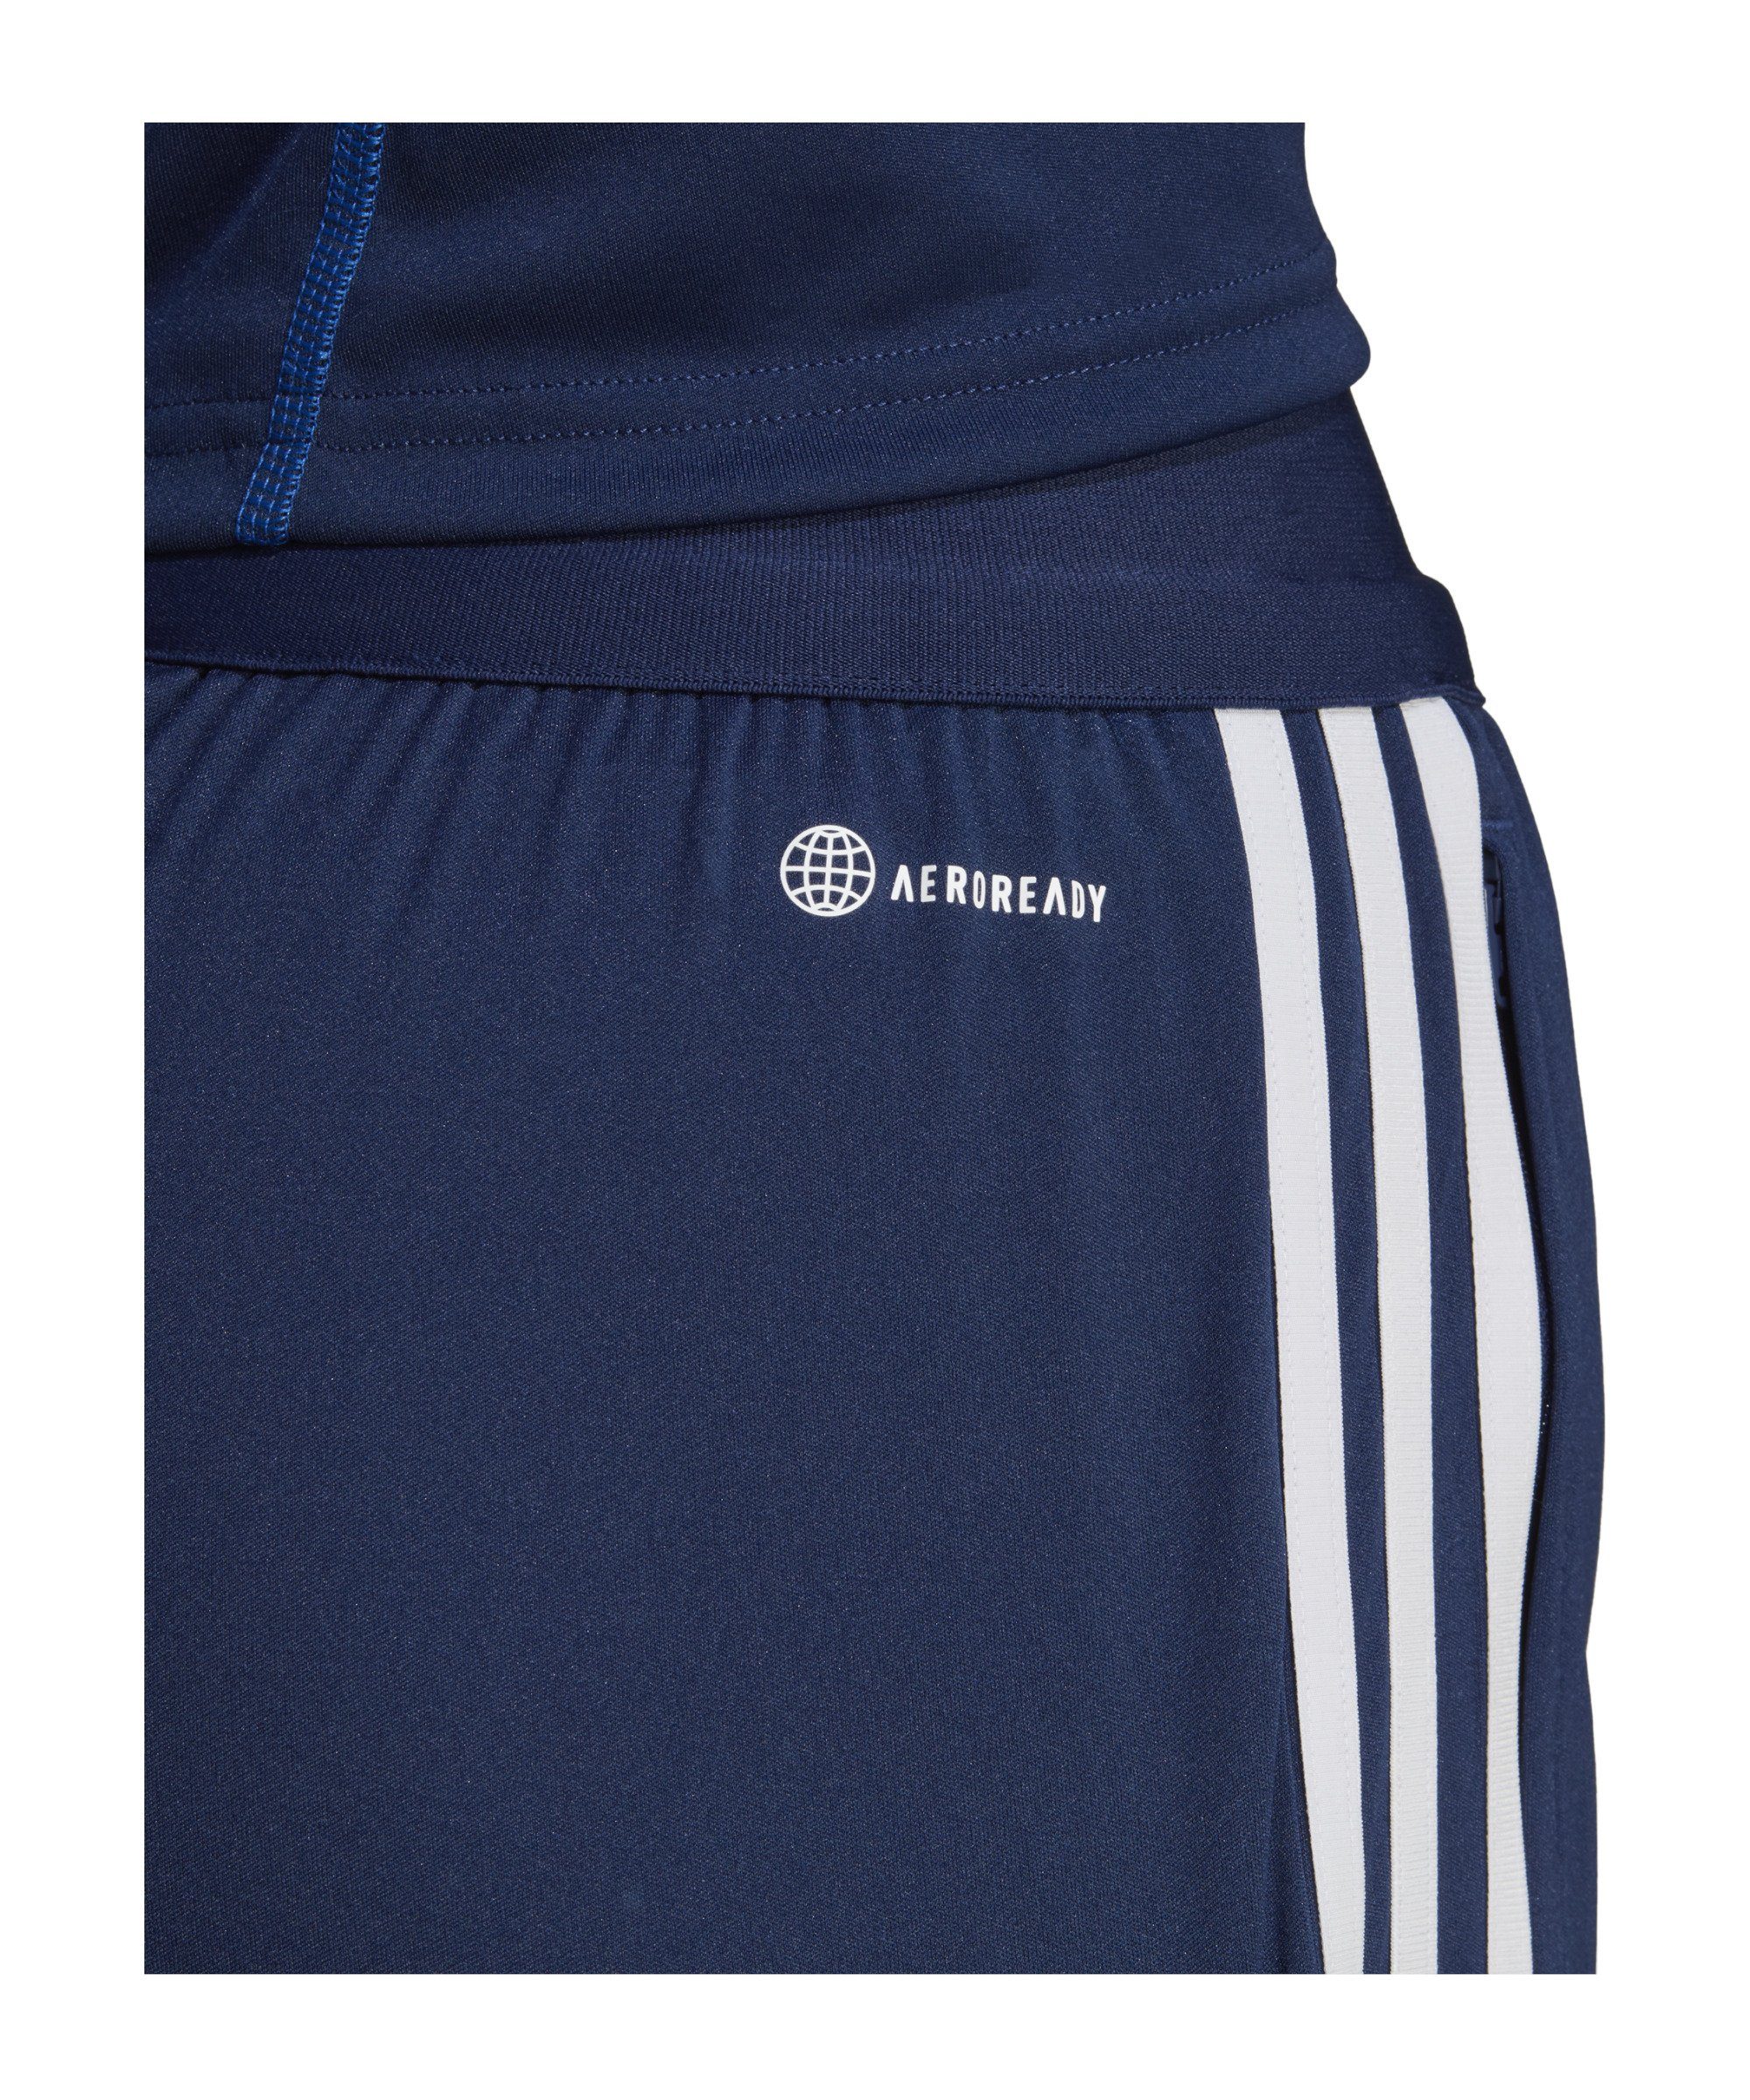 23 Damen Tiro Trainingsshort low Performance Sporthose League adidas blau